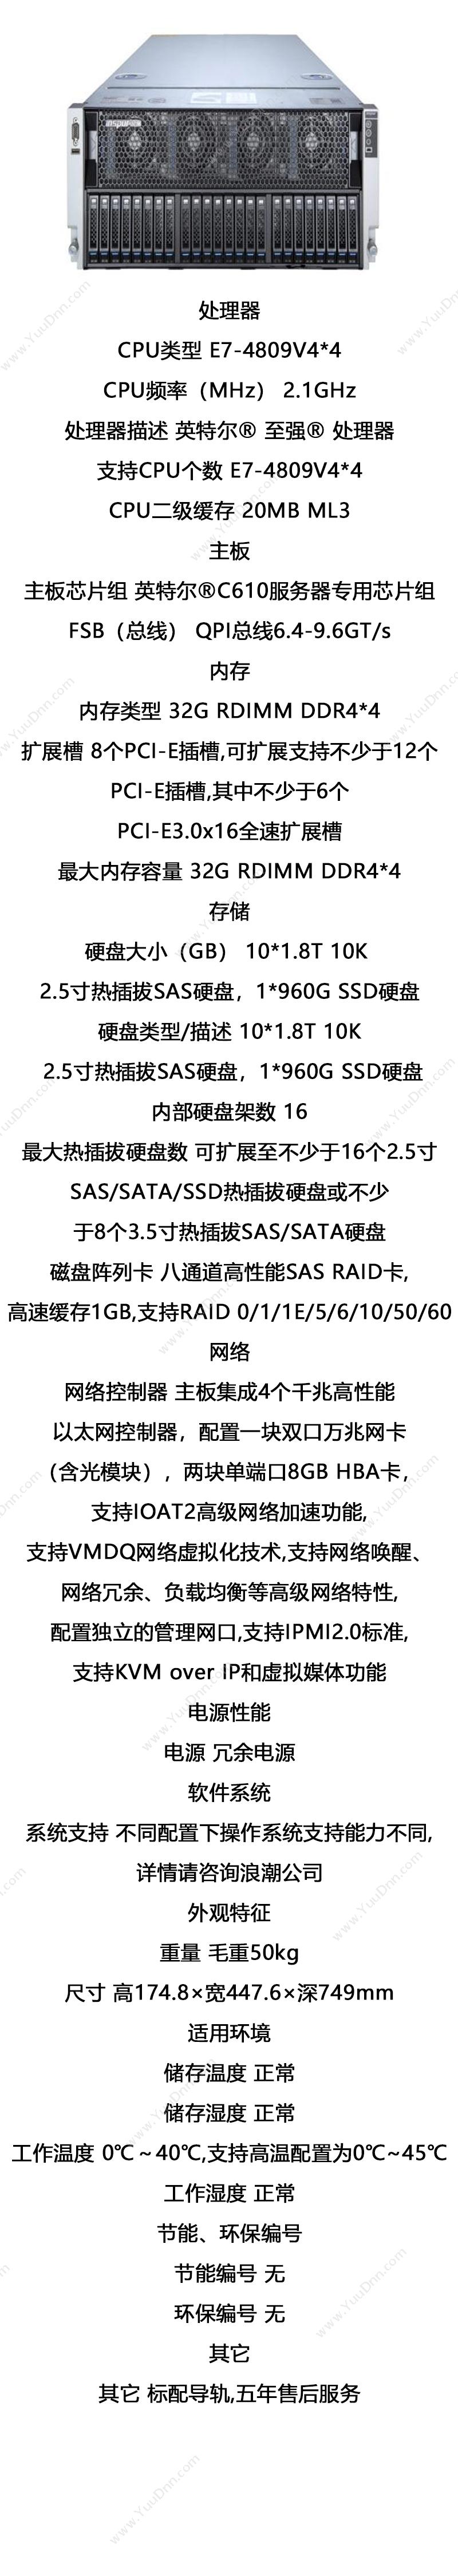 浪潮 Inspur NF8460M4(E7-4809v4*4/32G DDR4*4/1.8T SAS(10K）*10 服务器 高174.8×宽447.6×深749mm 塔式服务器